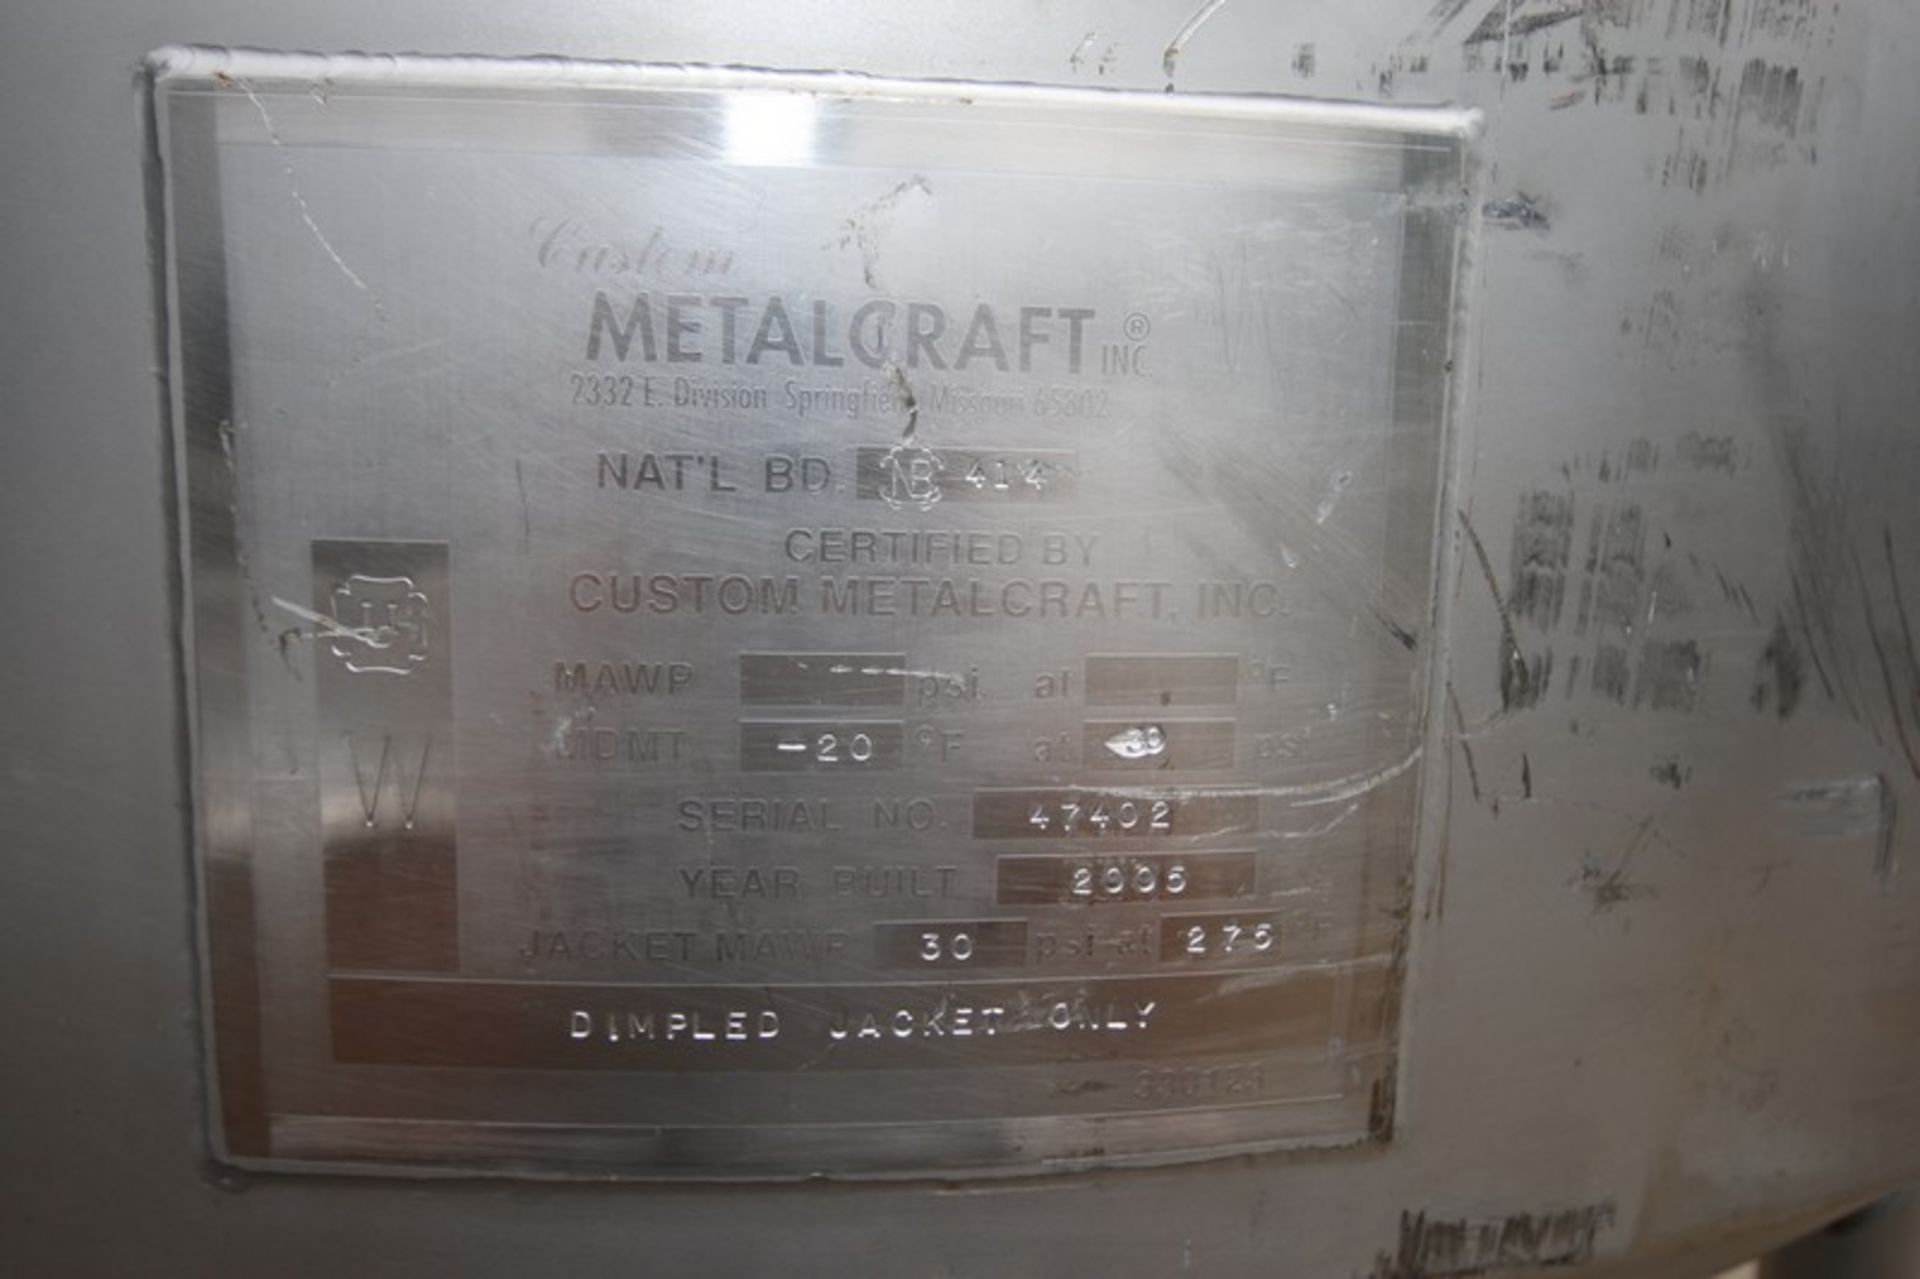 Custom Metalcraft Aprox. 80 Gallon Hinged Lid, Cone Bottom, S/S Processor, SN 47402, National BD # - Image 9 of 9